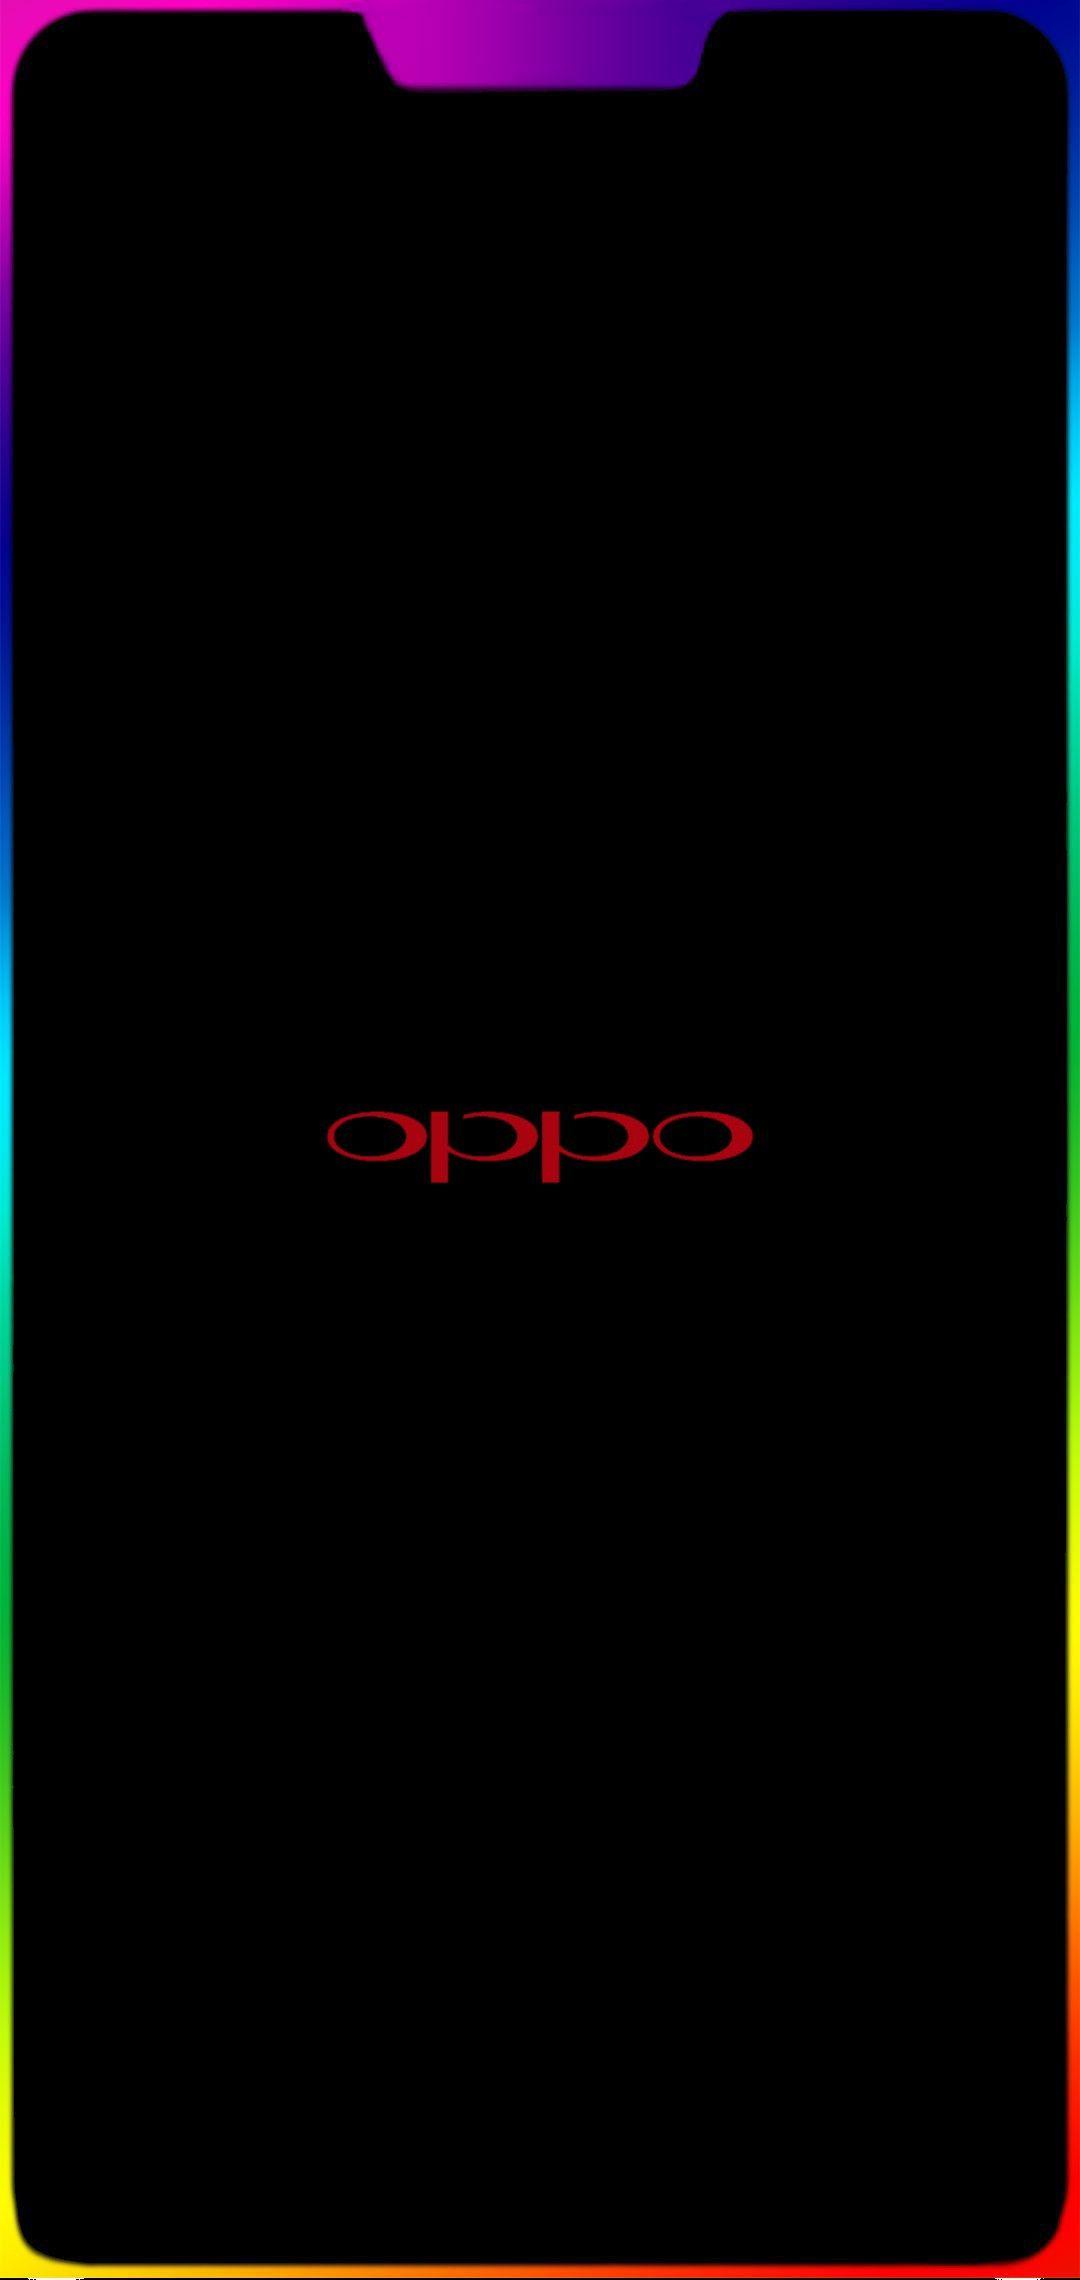 Oppo f7 notch border light red oppo 1080x2280. Oppo F7